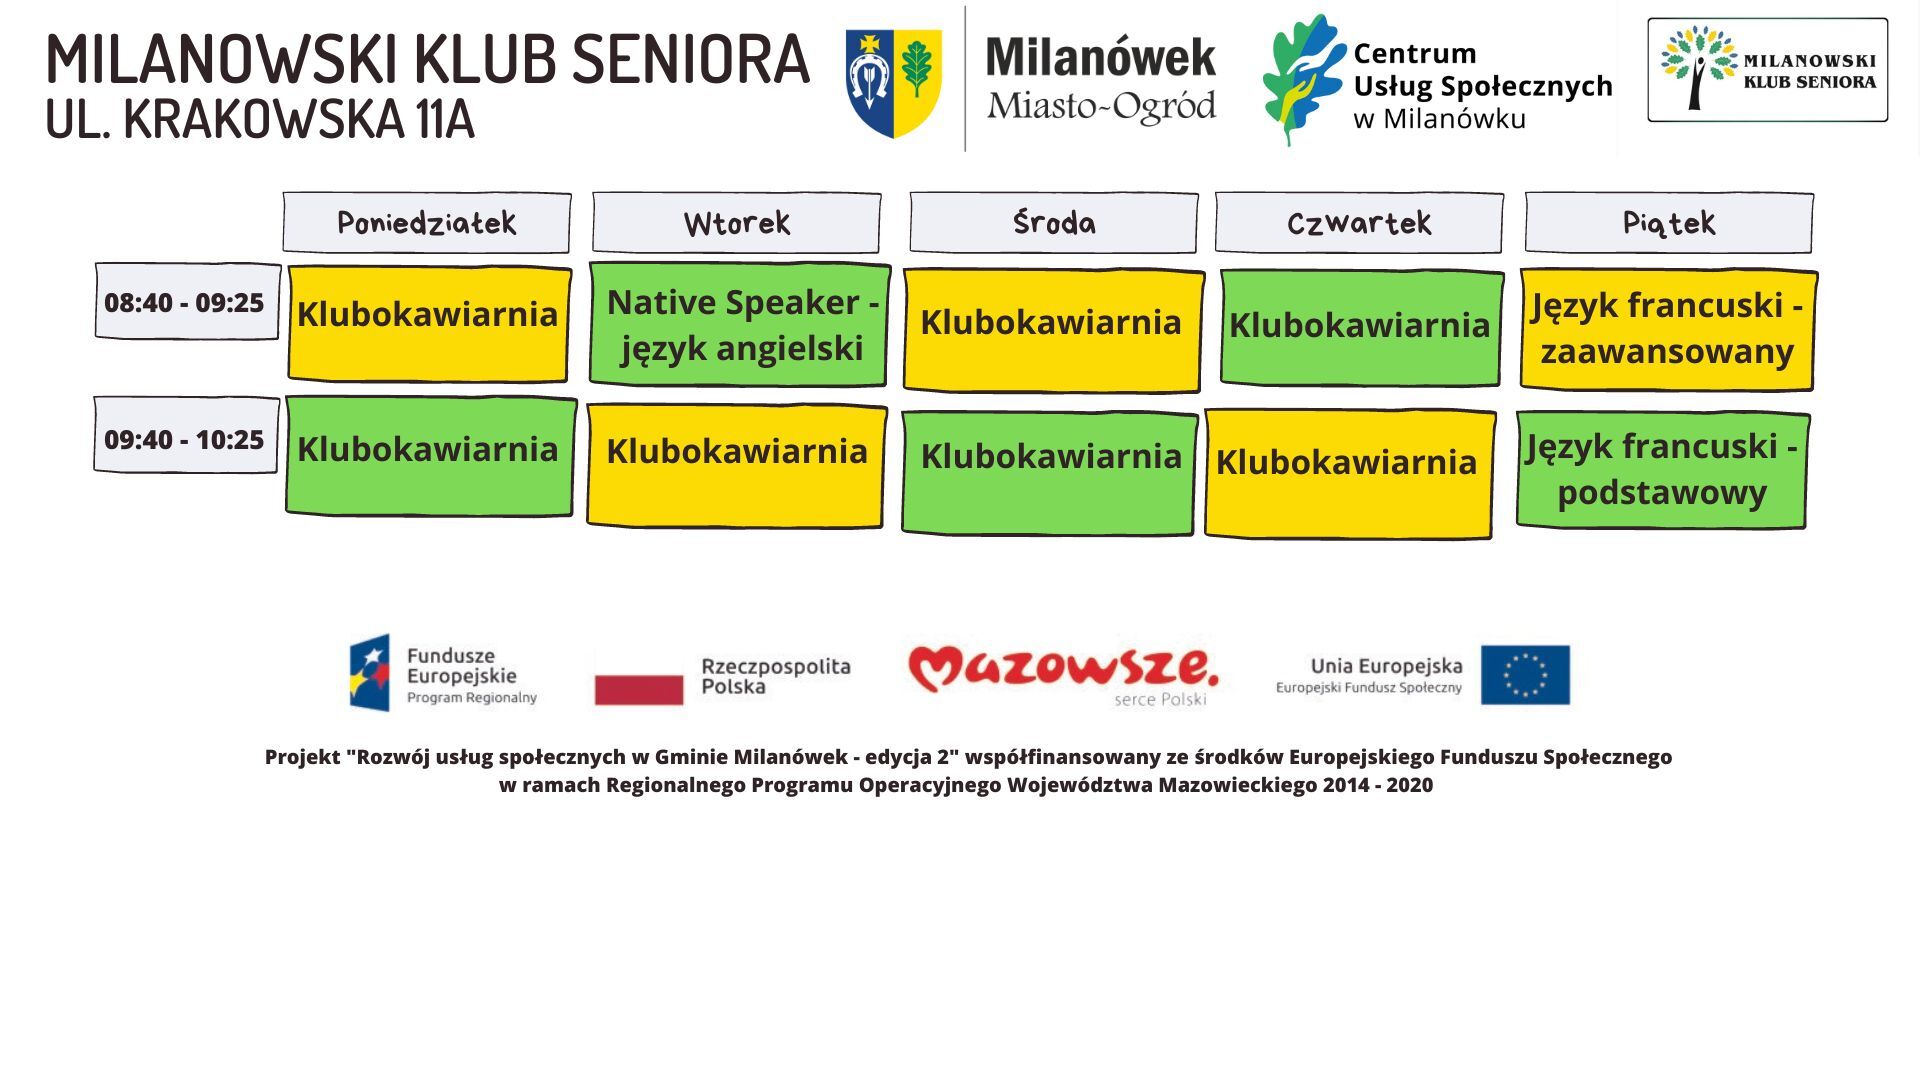 Harmonogram Milanowskiego Klubu Seniora